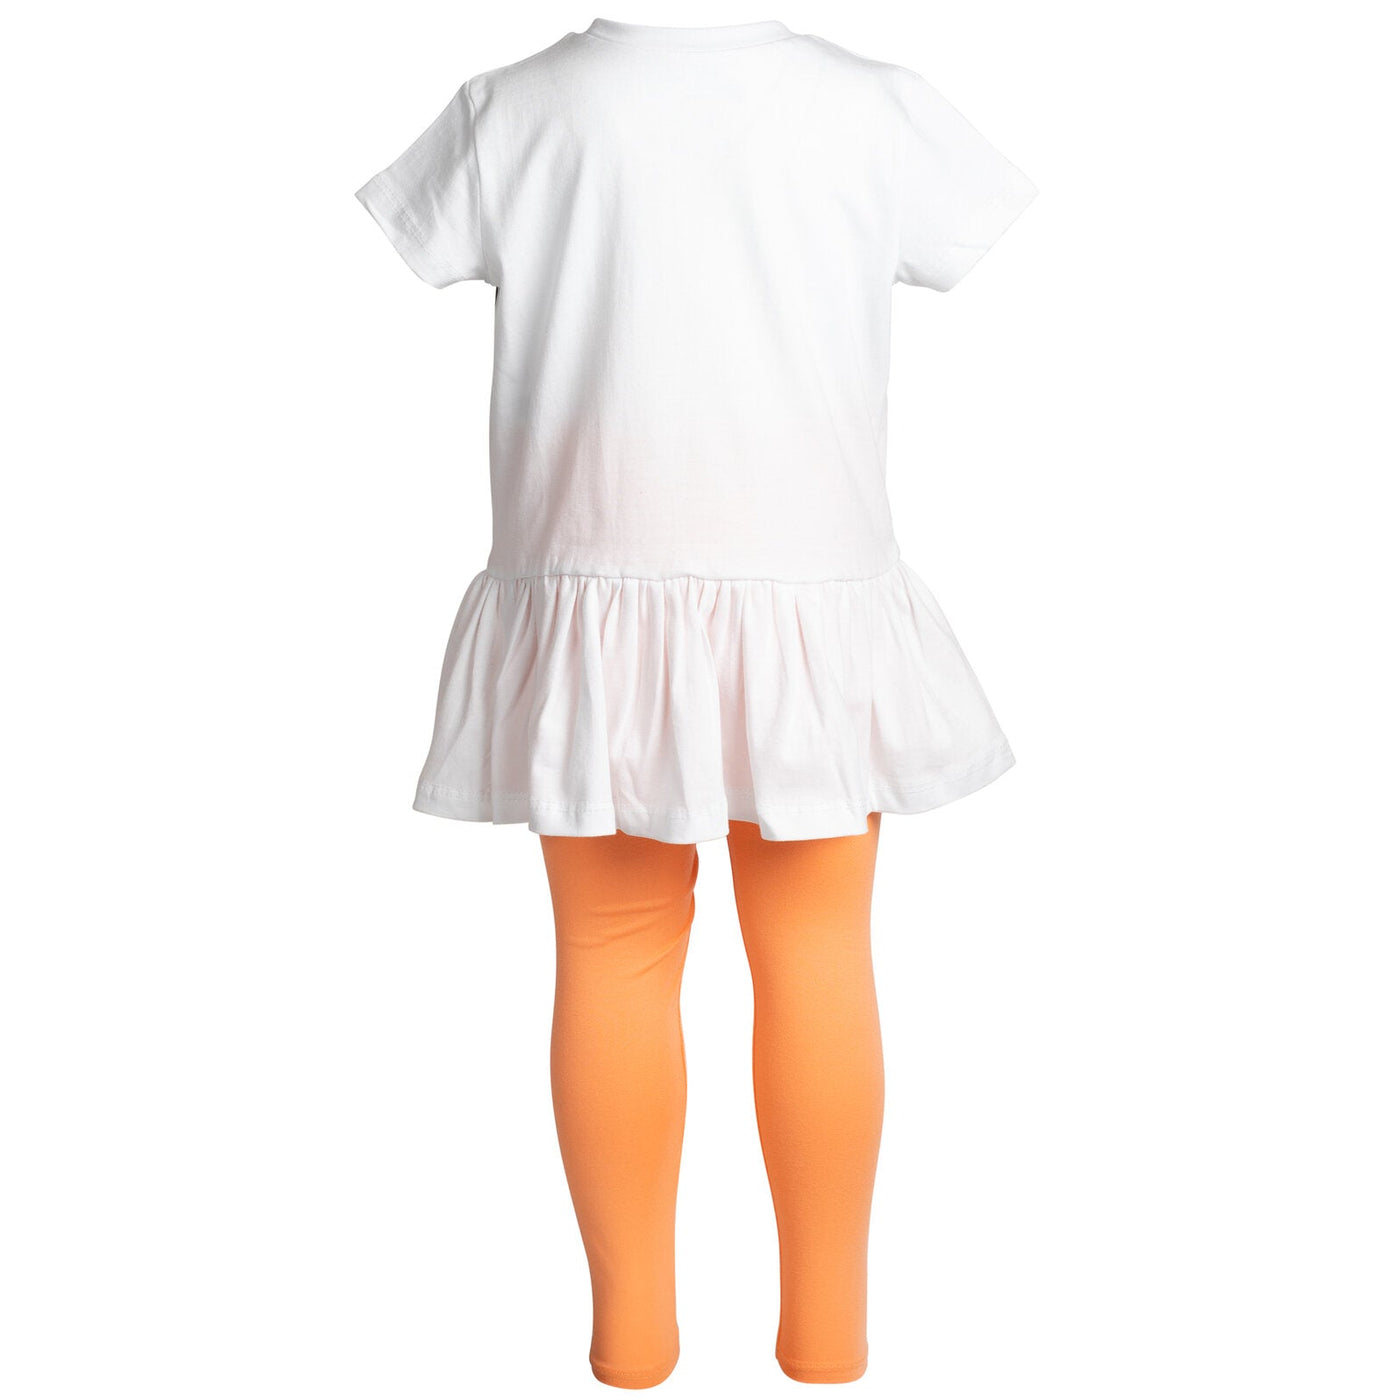 Disney Moana T-Shirt and Leggings Outfit Set - imagikids